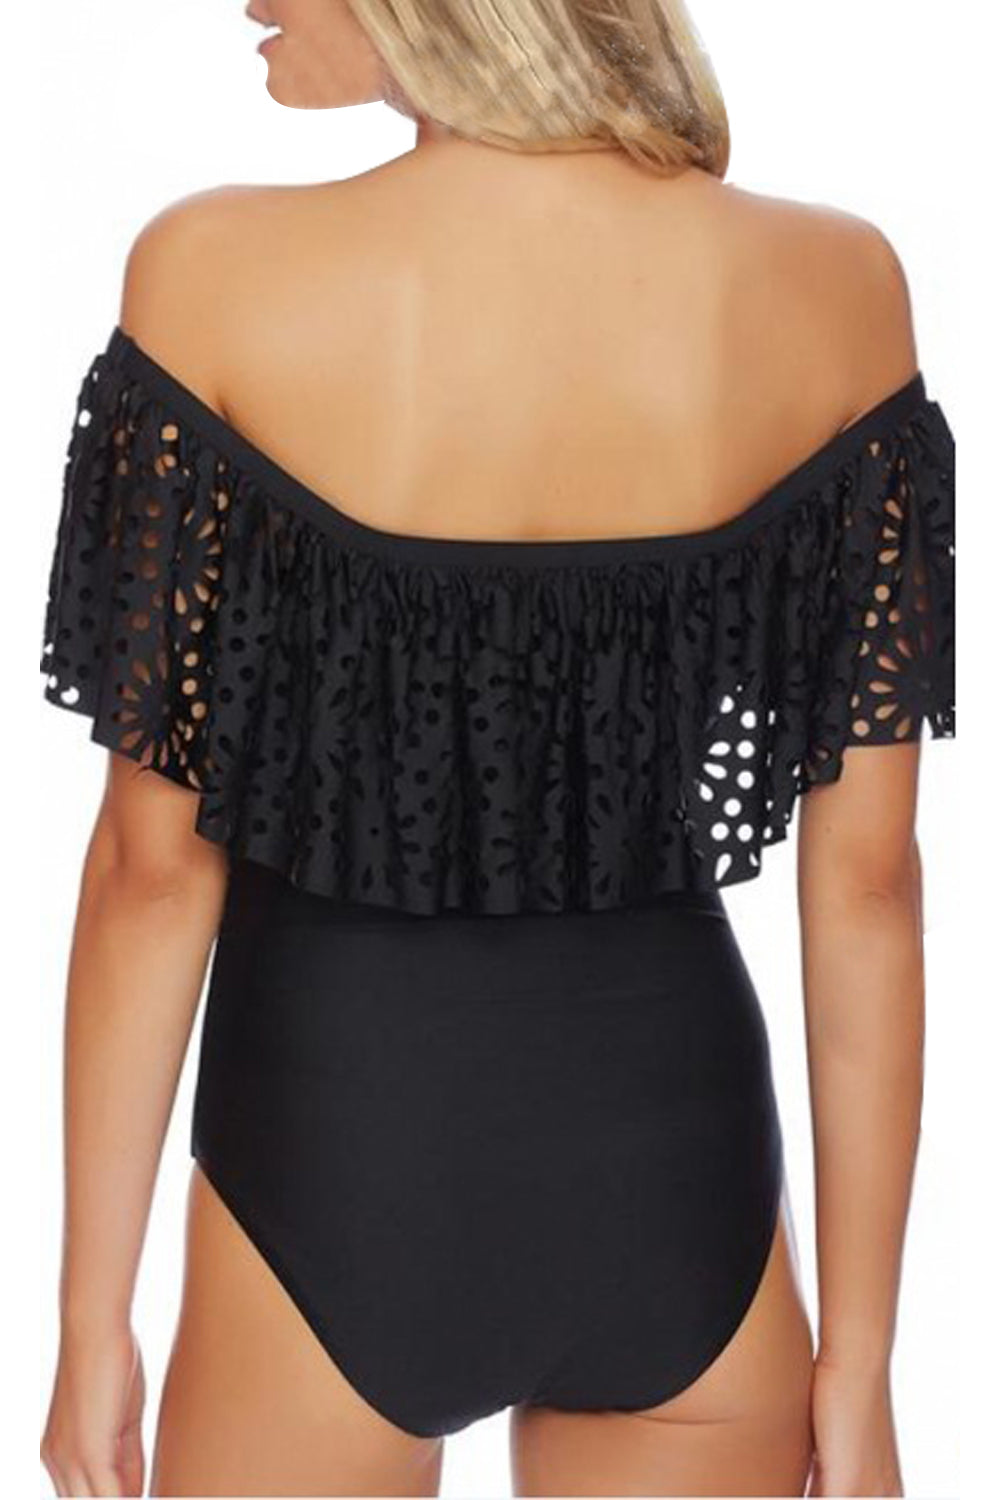 Iyasson Black Lace Magic Falbala Bikini Set